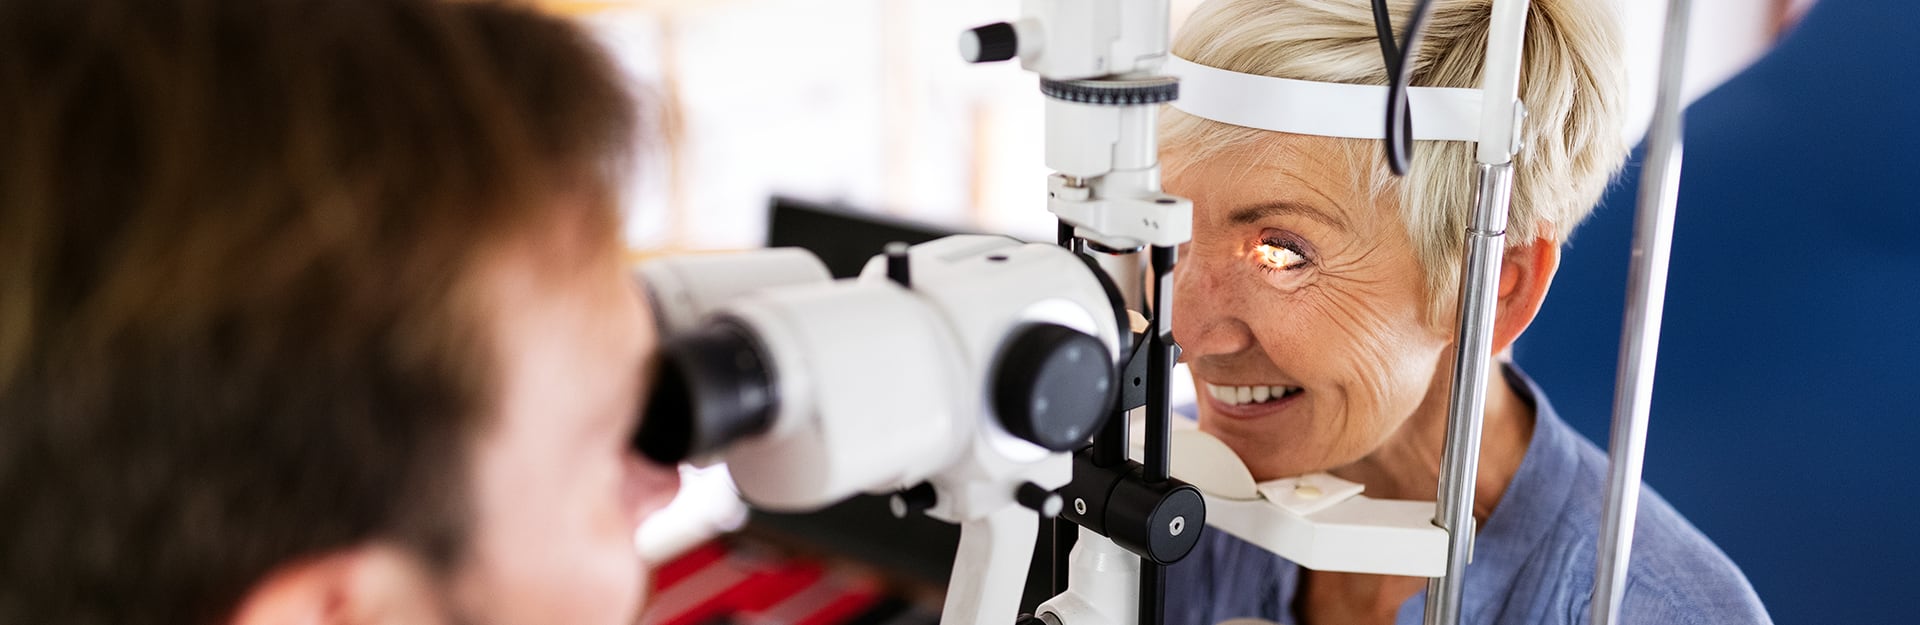 hero image for diabetic eye exams showcasing an optometrist performing comprehensive eye exam on patient.